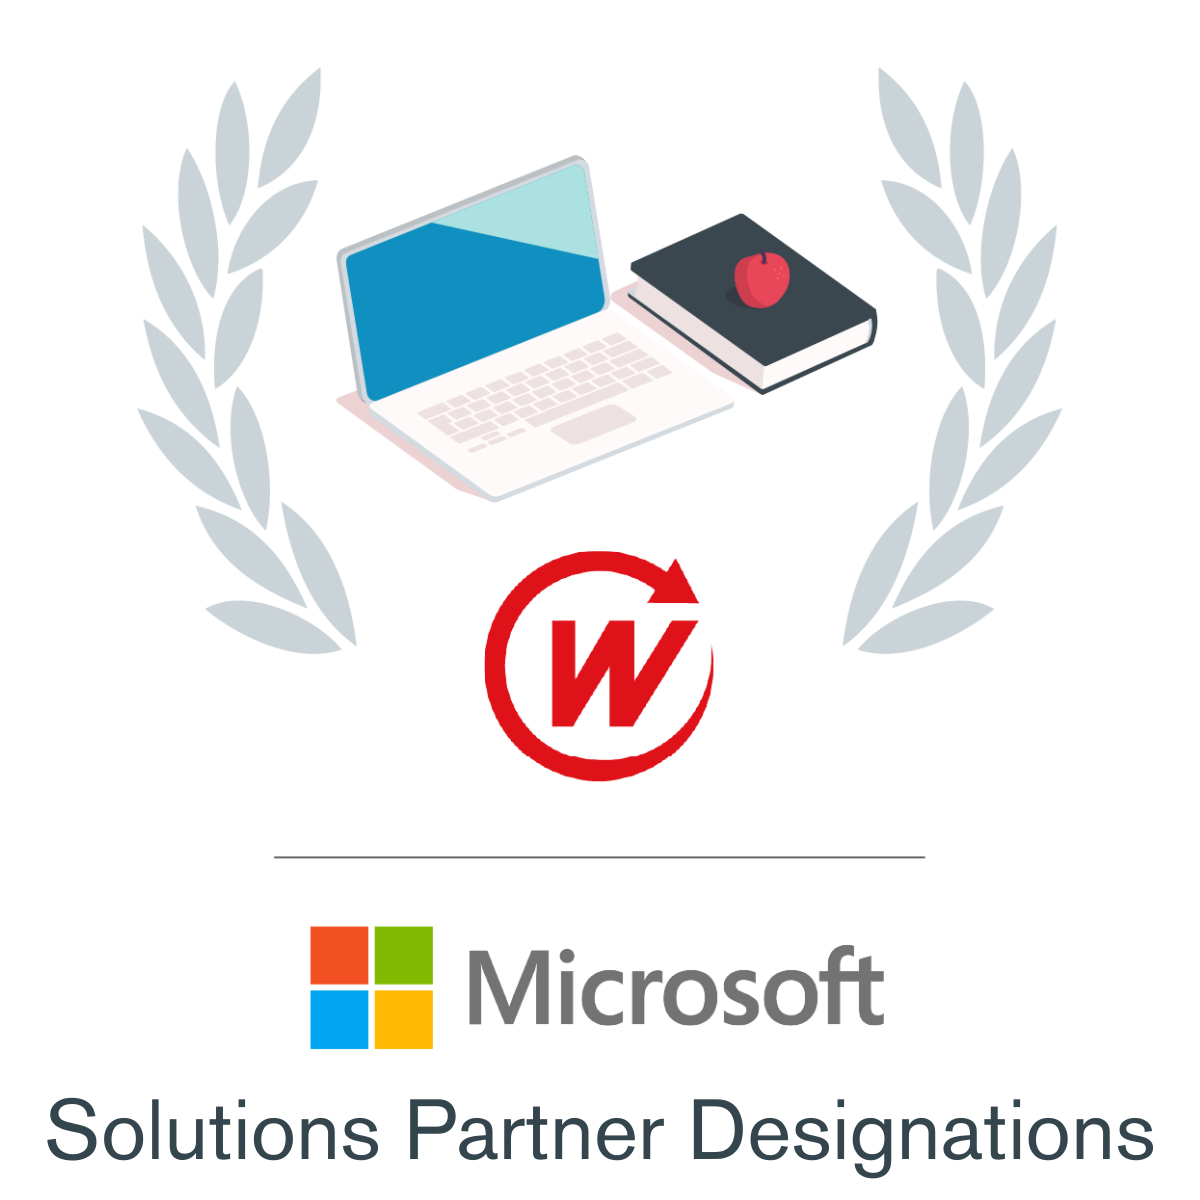 Solutions Partner Designations